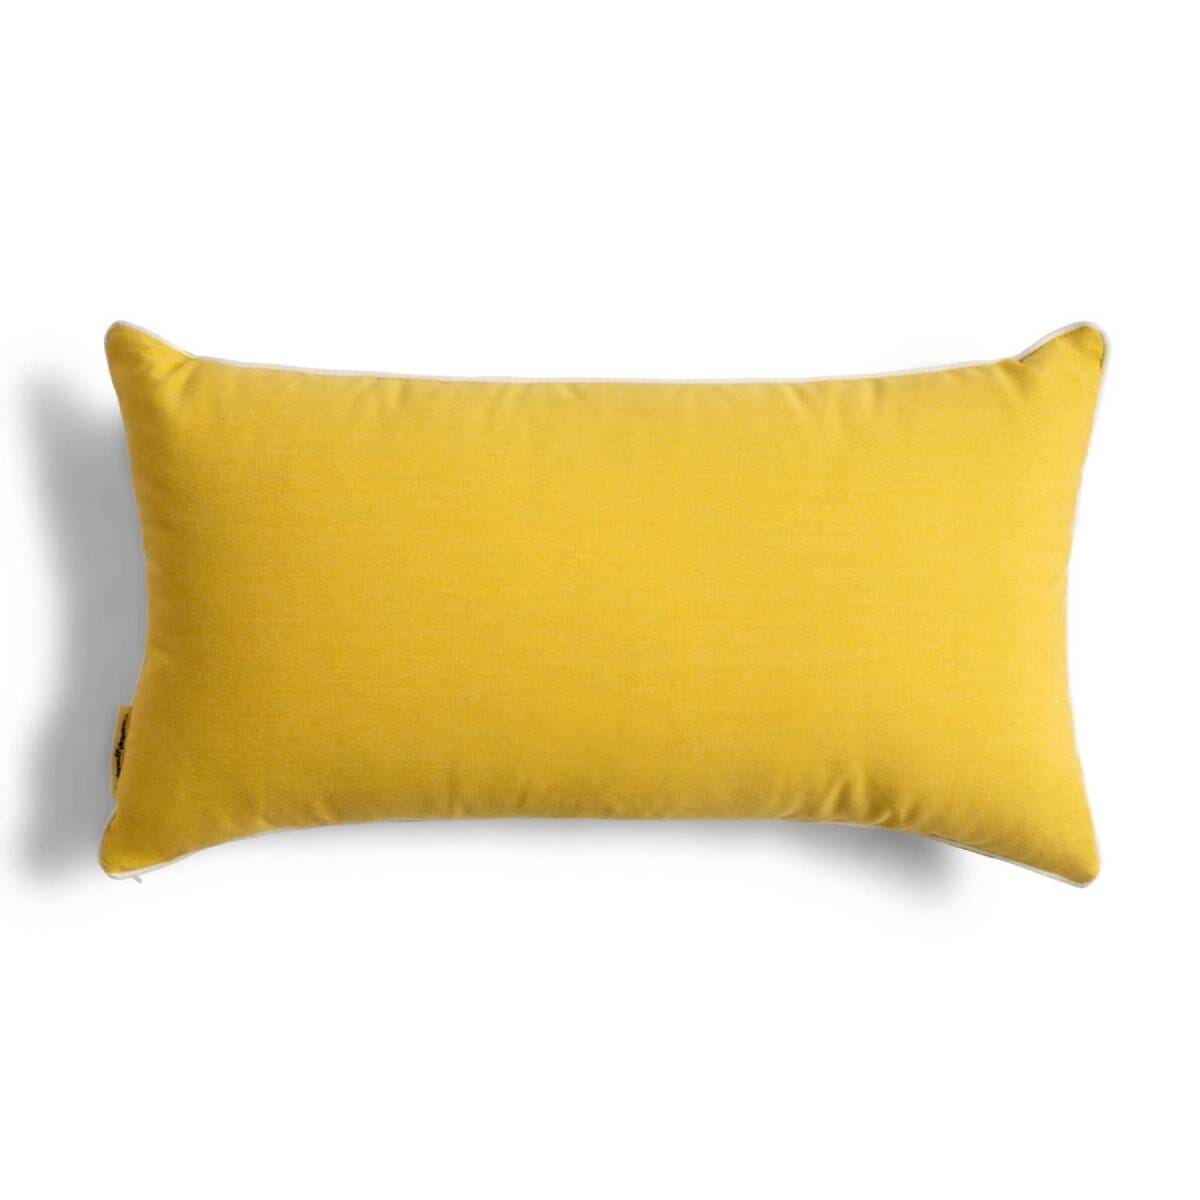 The Rectangle Throw Pillow - Rivie Mimosa Rectangle Throw Pillow Business & Pleasure Co Aus 